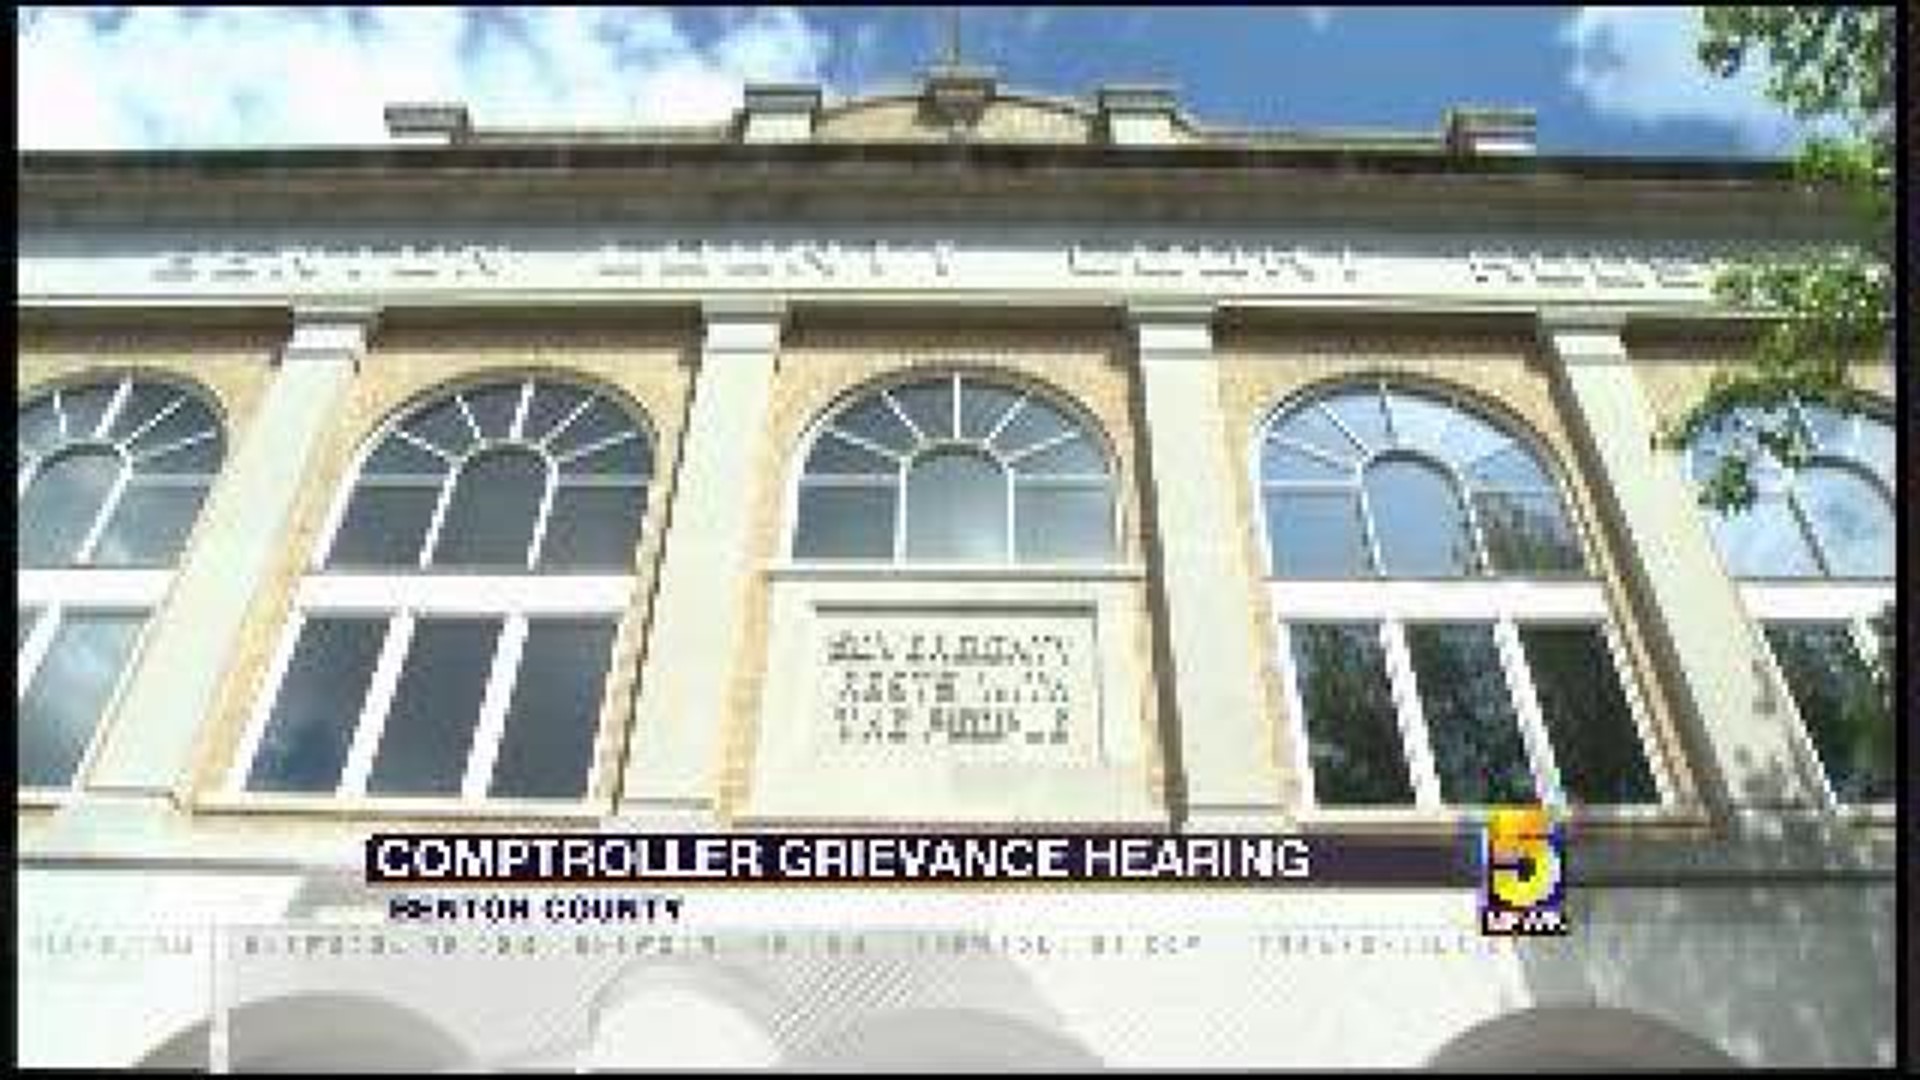 Benton County Comptroller Grievance Hearing